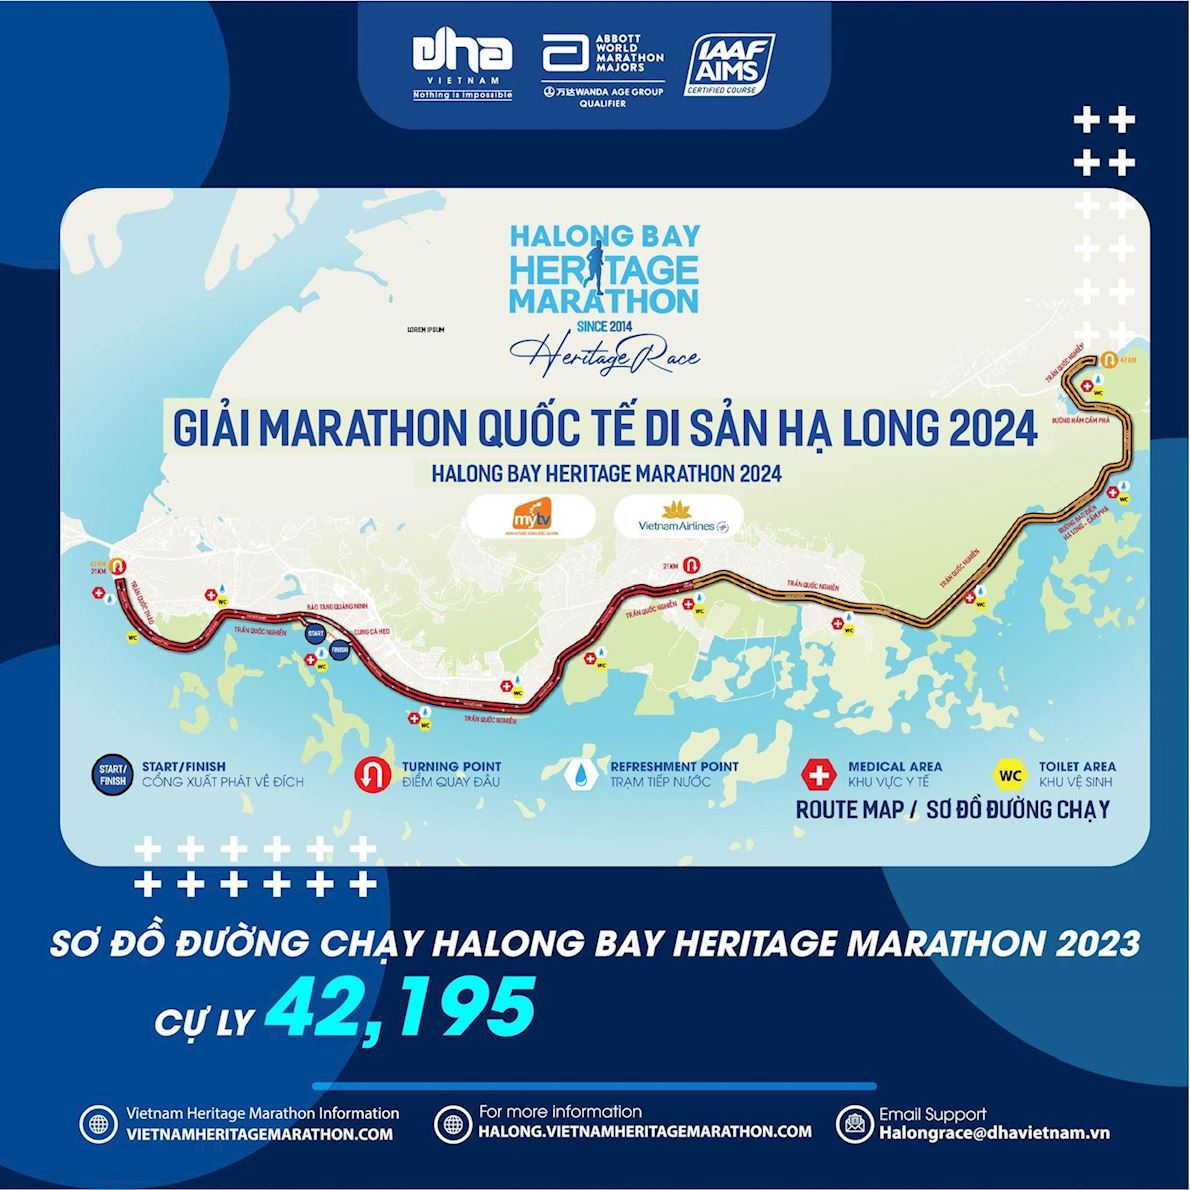 Halong Bay Heritage Marathon Route Map